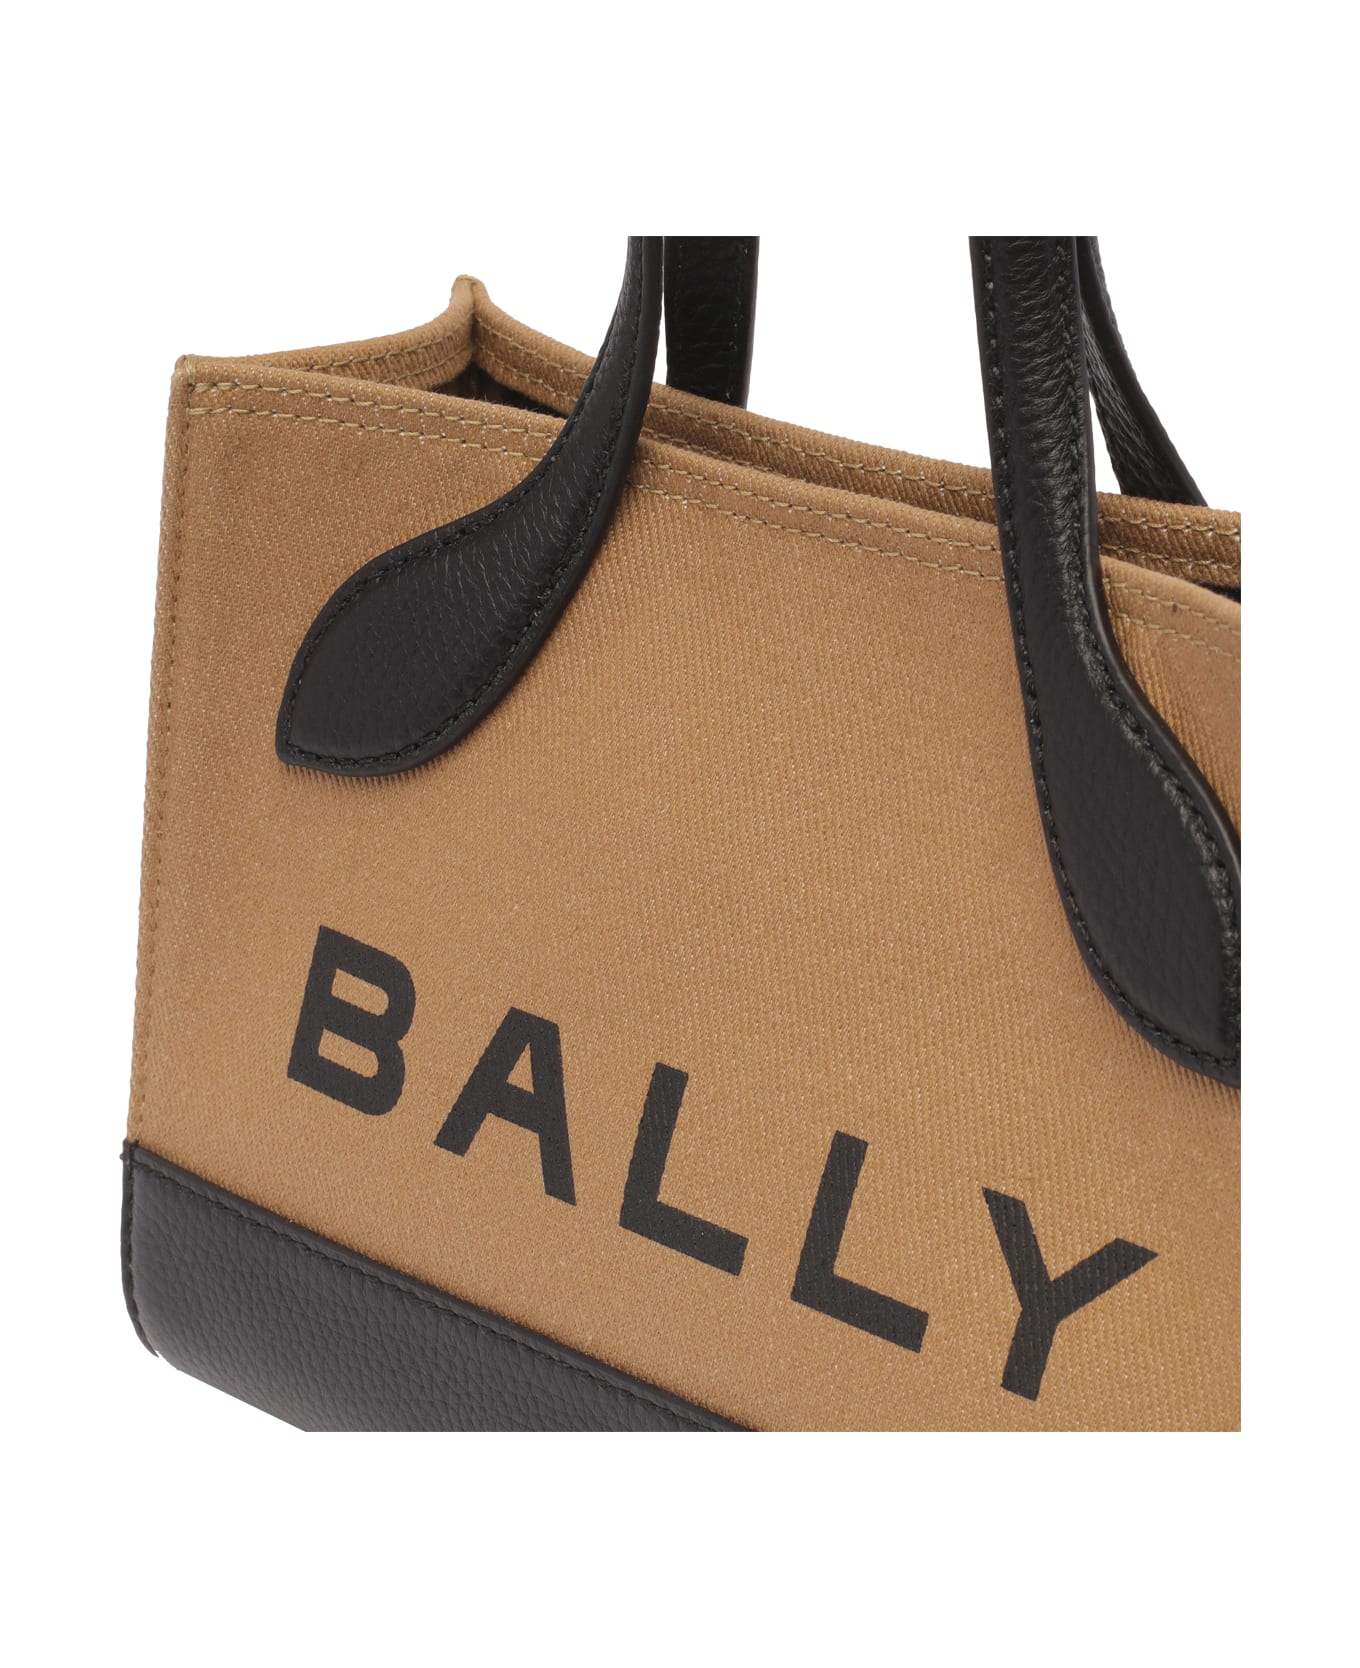 Bally Logo Tote Bag - Sand/black+oro トートバッグ